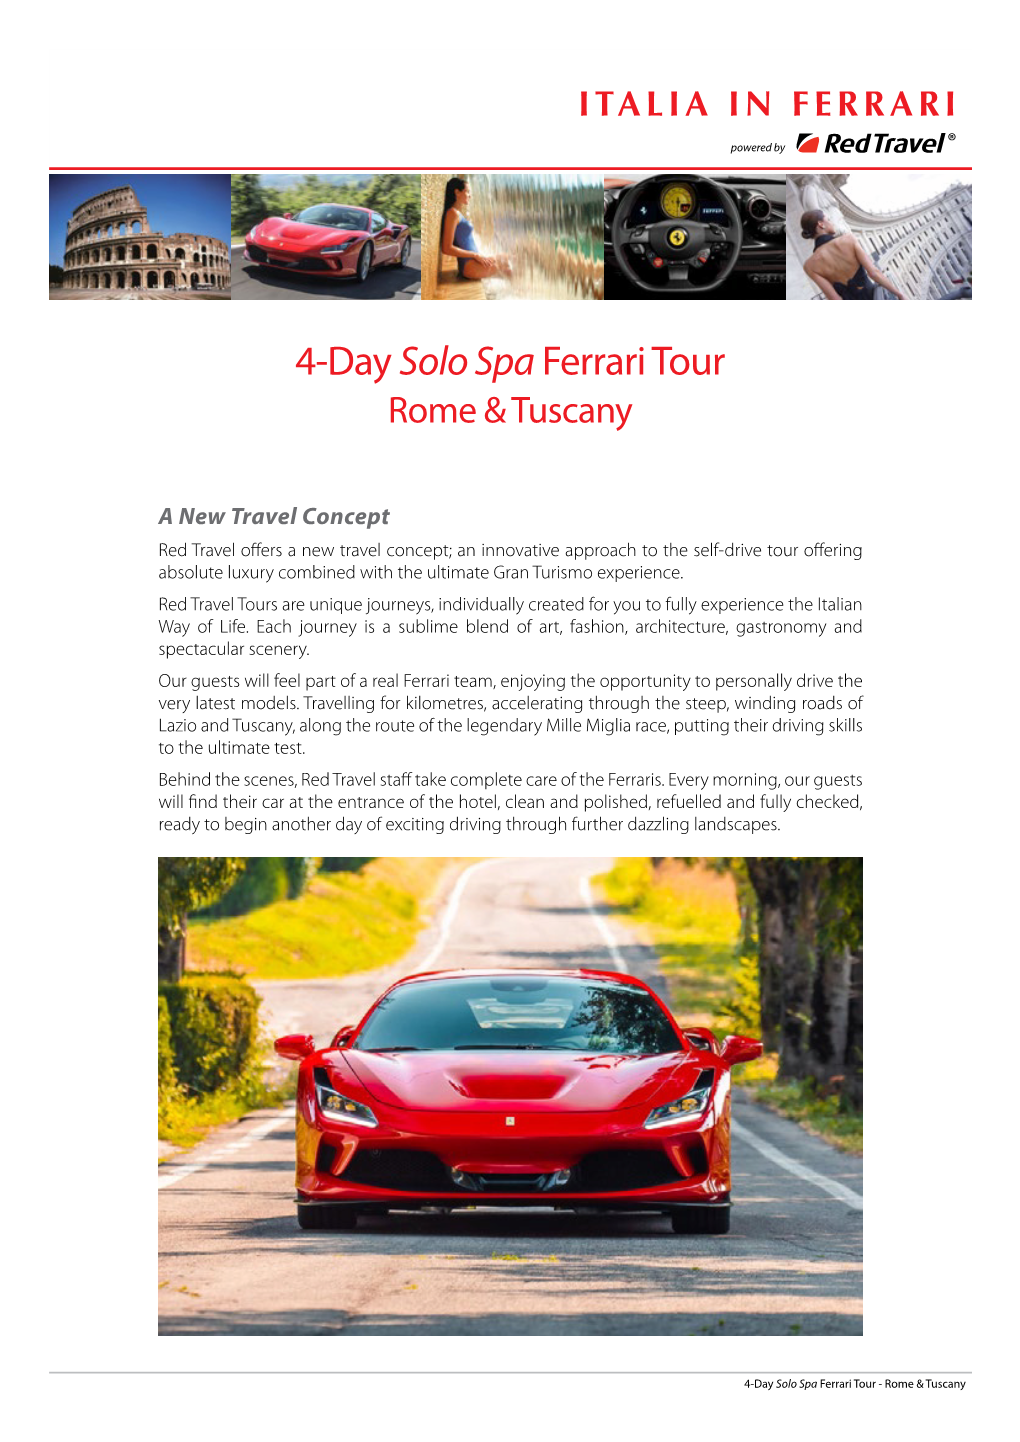 4 Days Solo Spa Rome & Tuscany Ferrari Tour